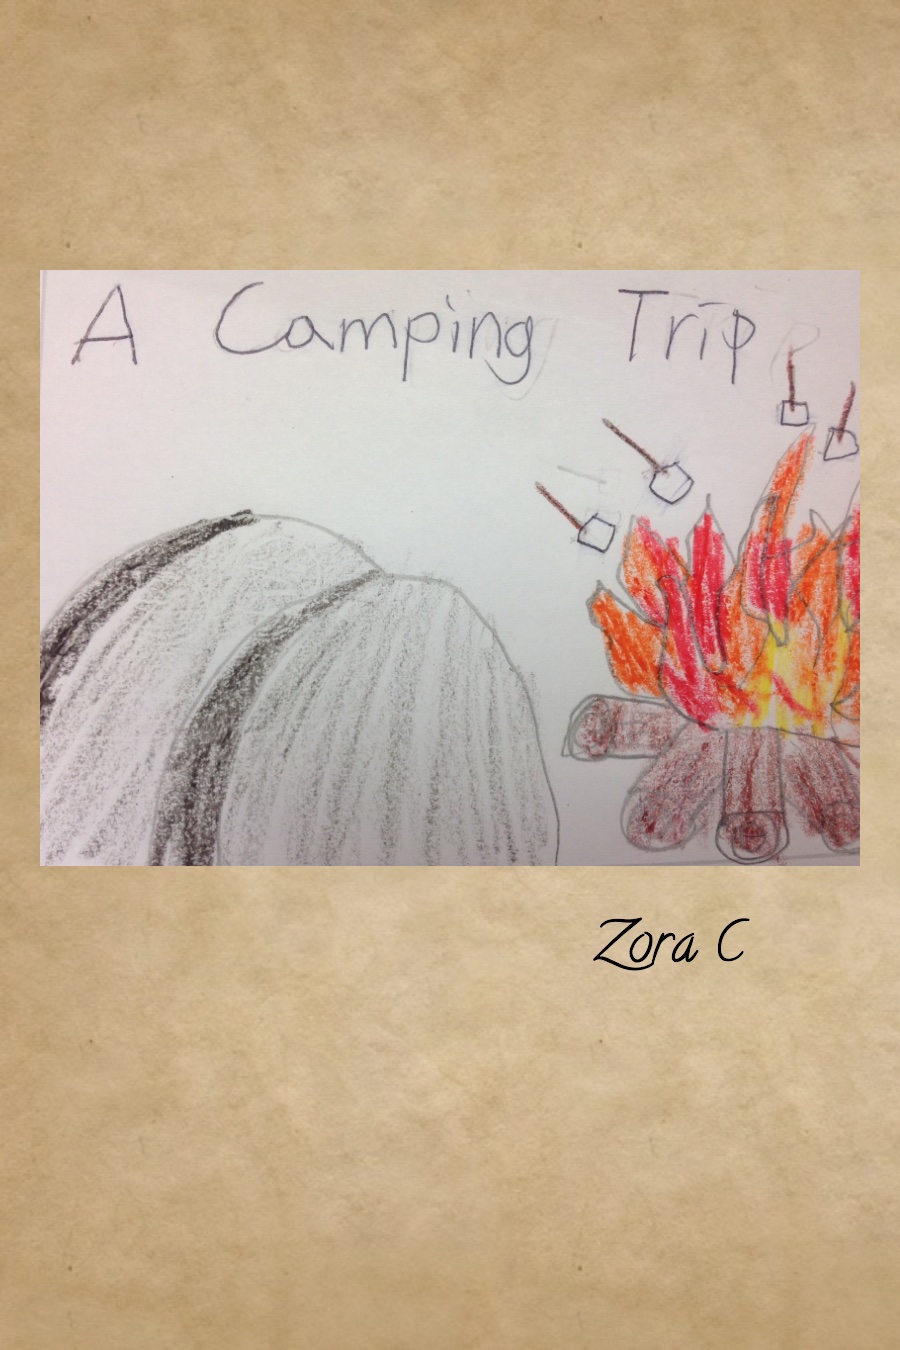 A Camping Trip by Zora C